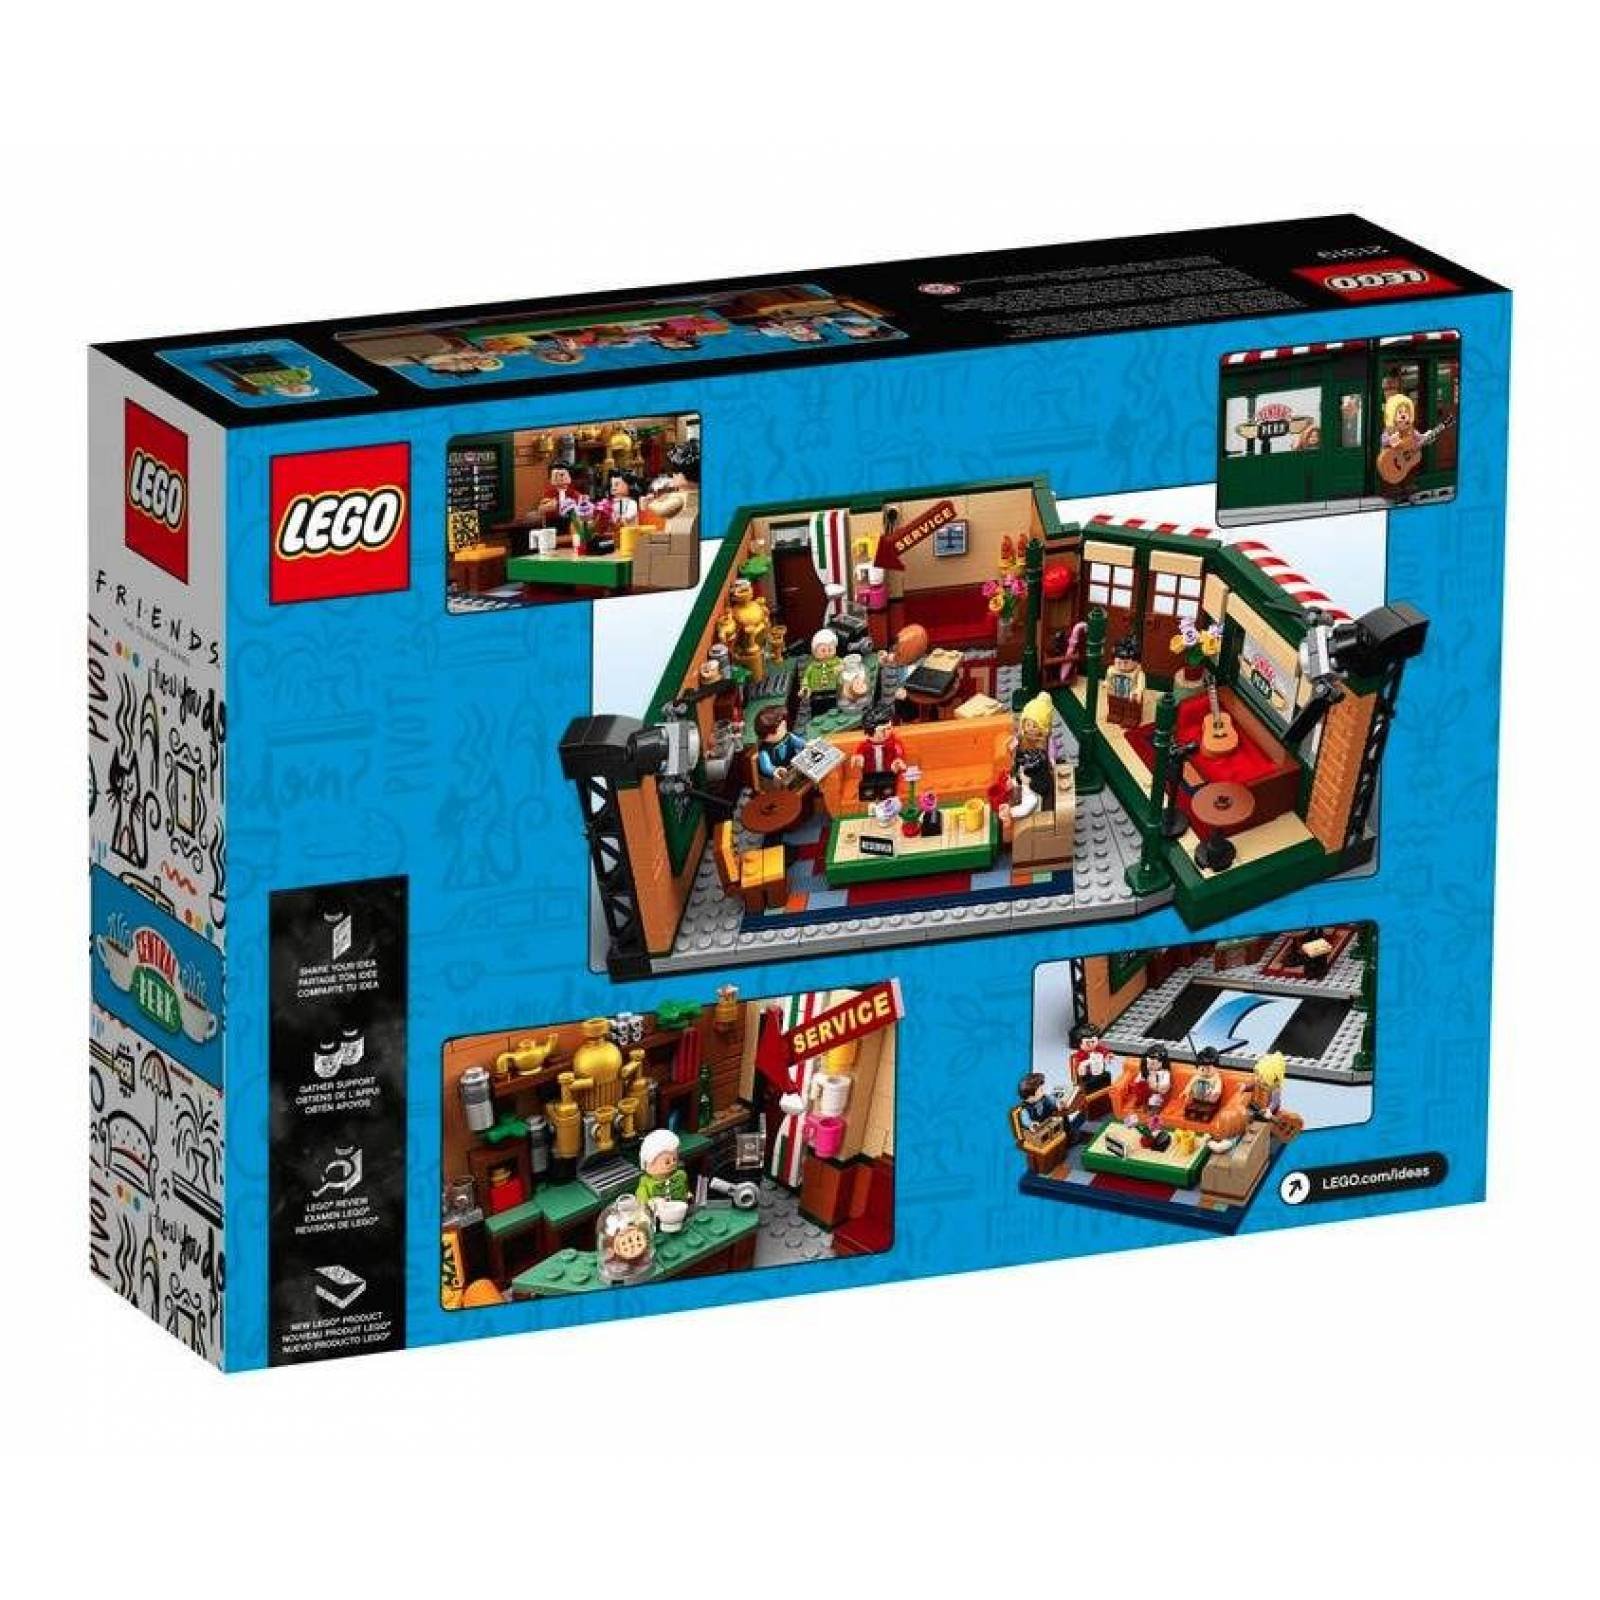 Lego Ideas 21319 Central Perk Friends